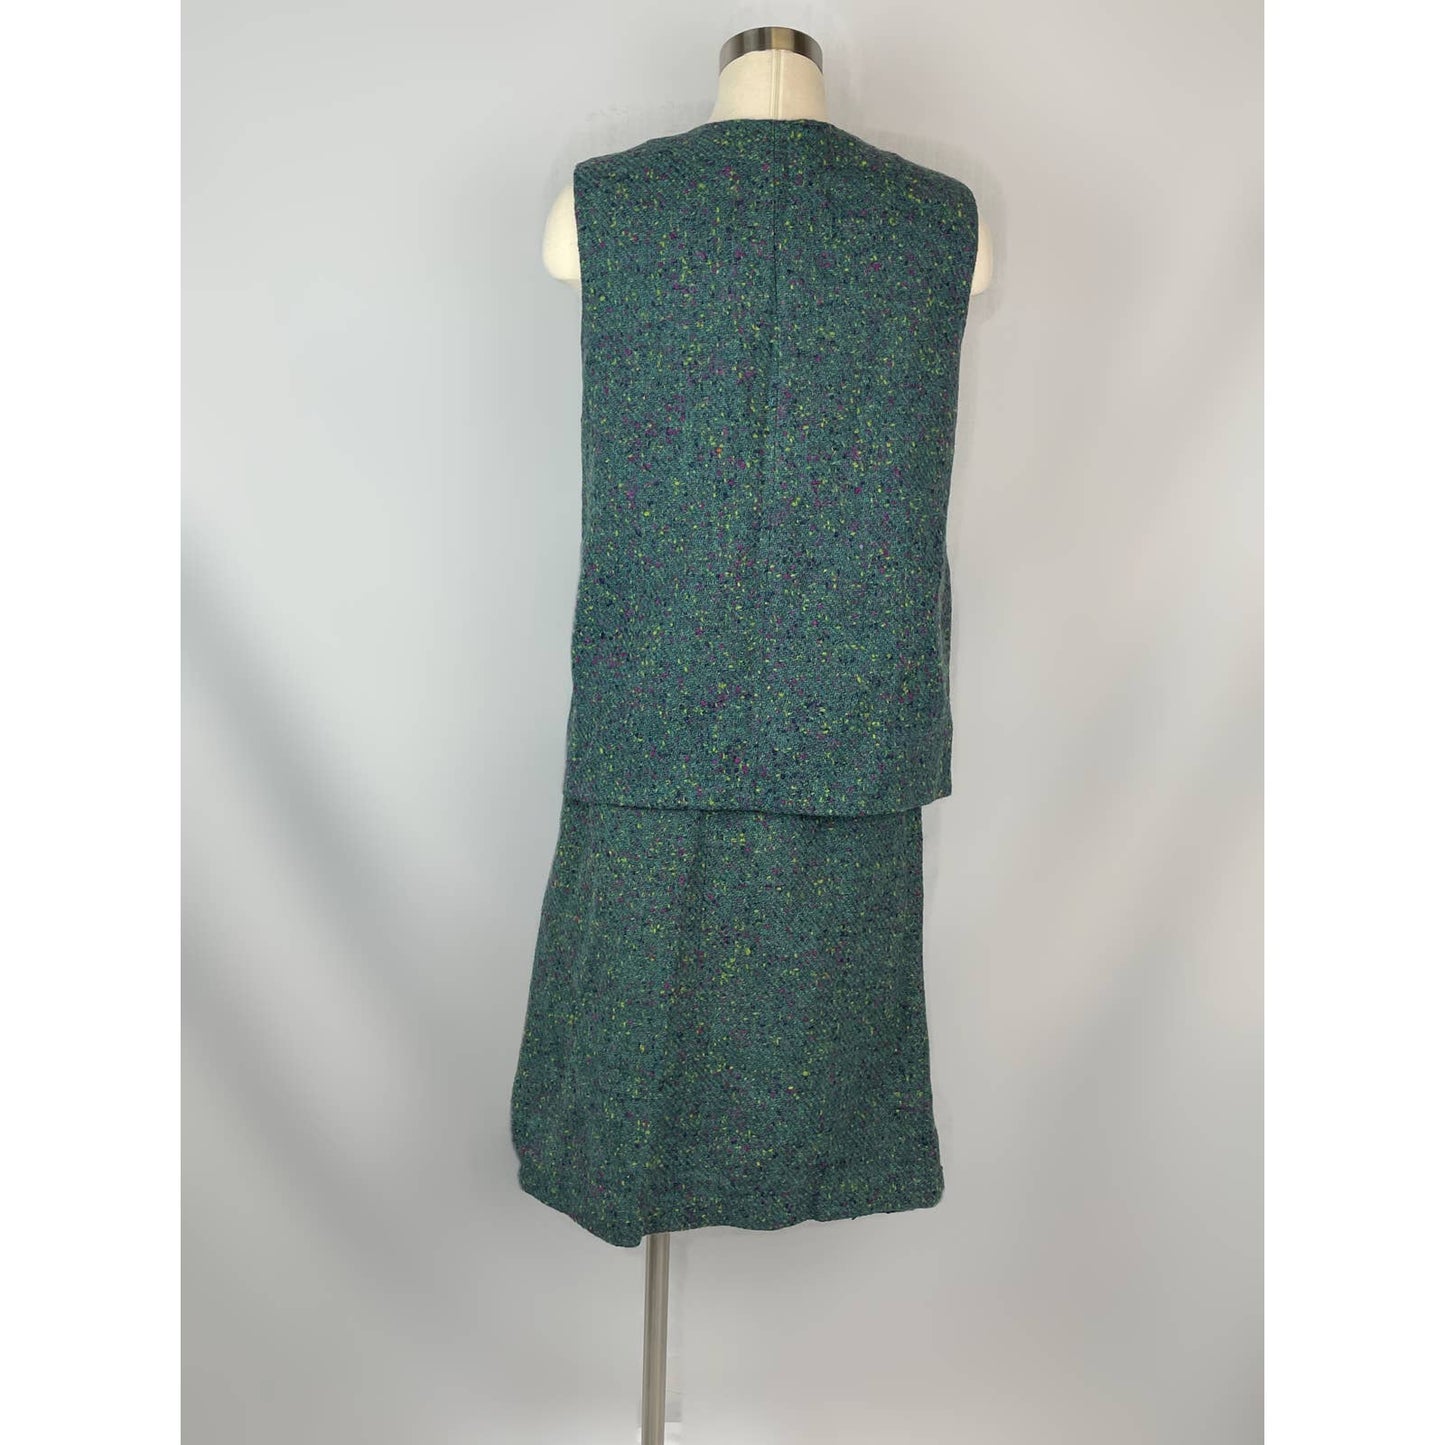 Vintage 1960s Handmade Wool Suit Green Pink Speckles Vest M/L